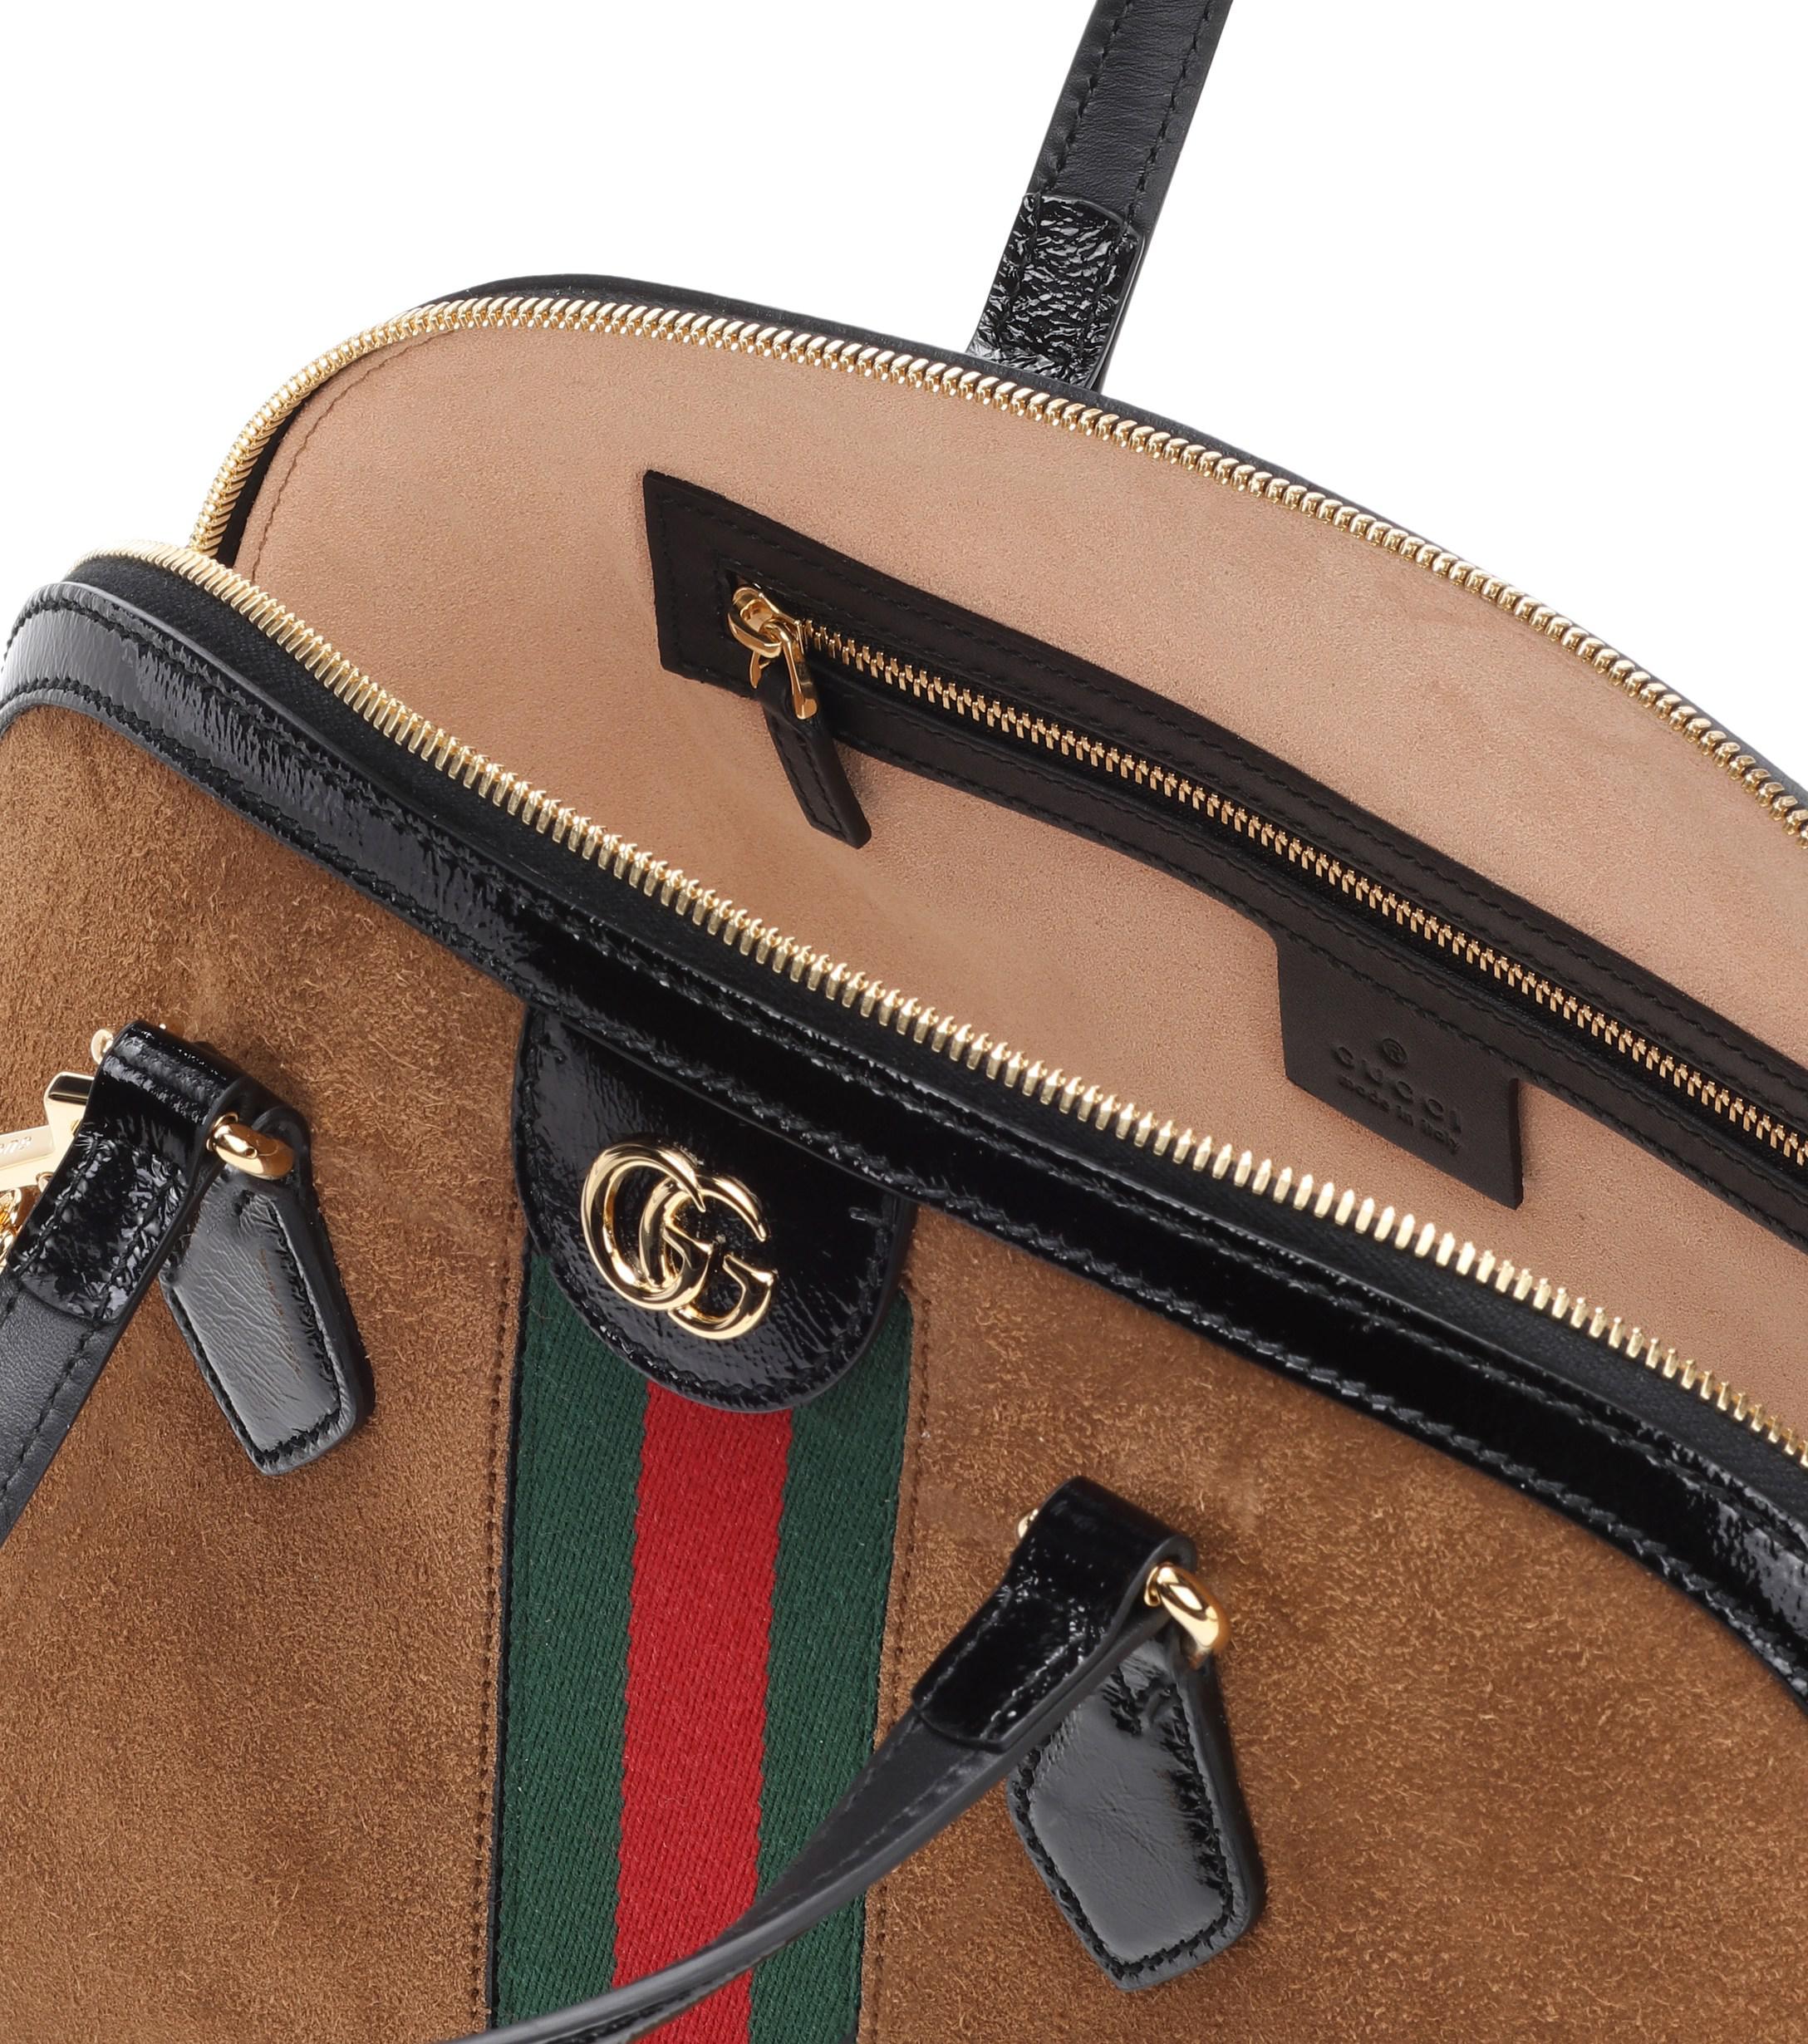 Gucci Ophidia Medium Suede Shoulder Bag in Brown - Lyst